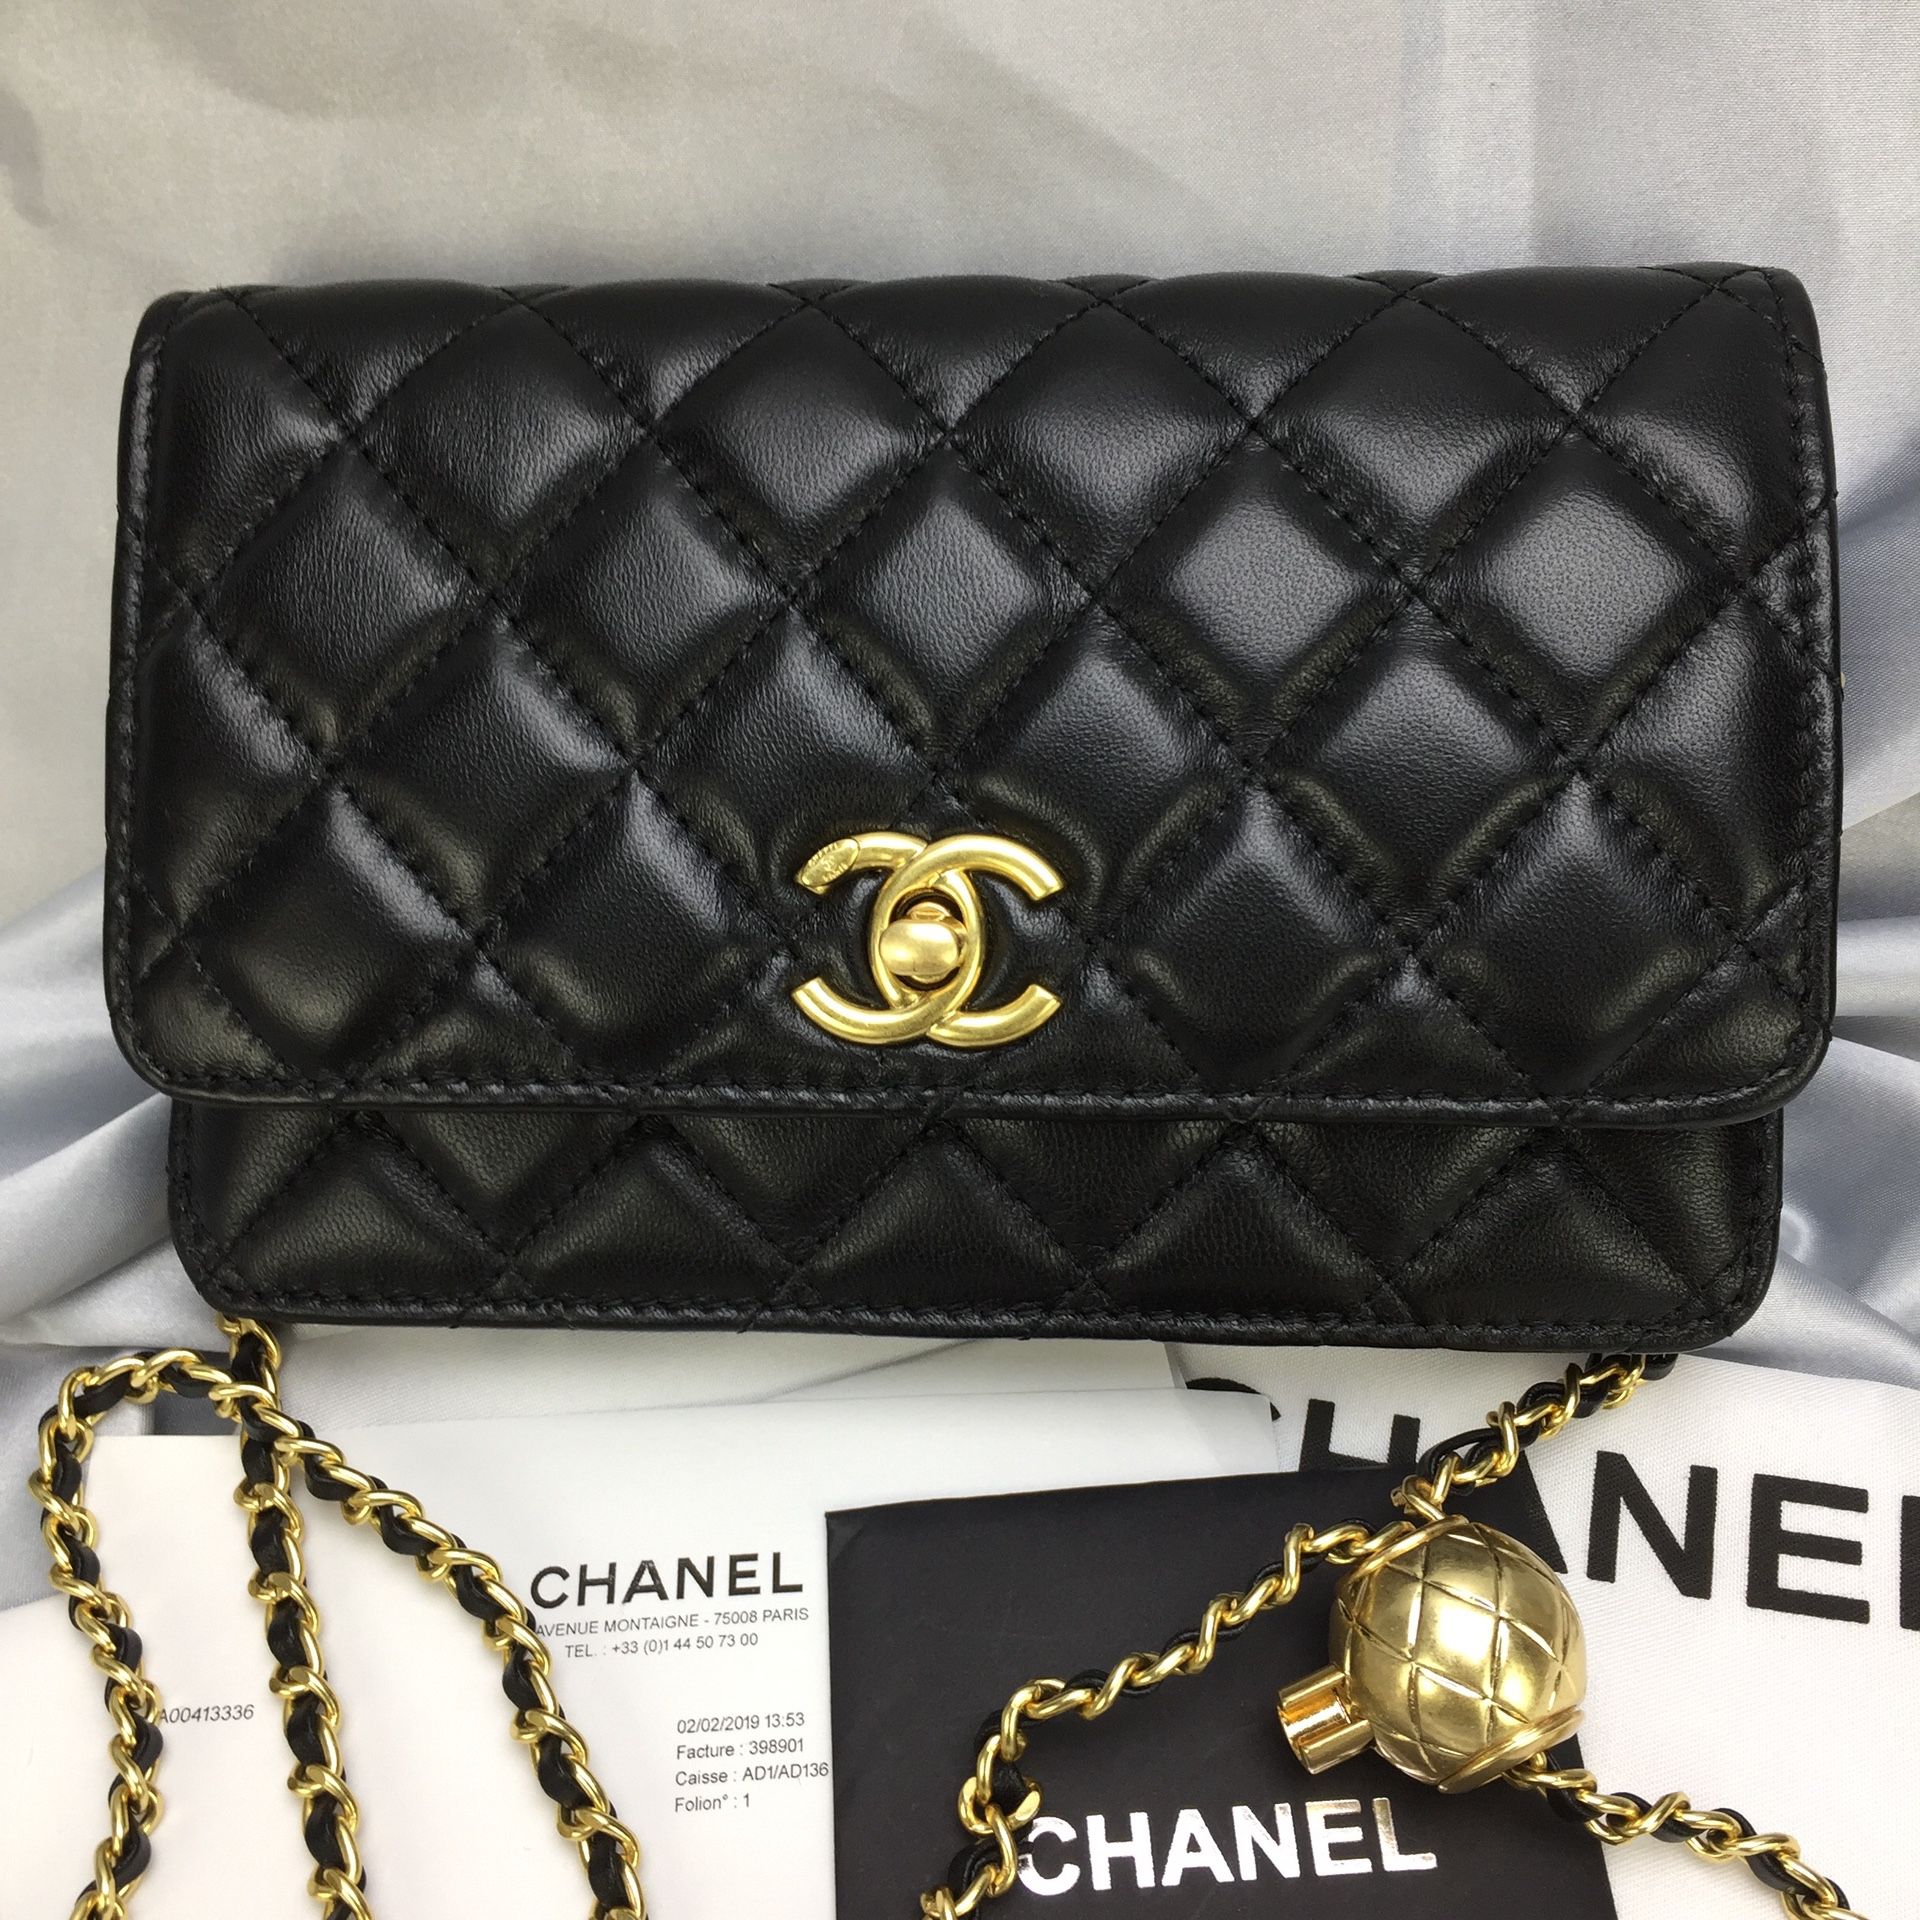 Chanel bag diamond pattern small gold ball bag ladies chain bag